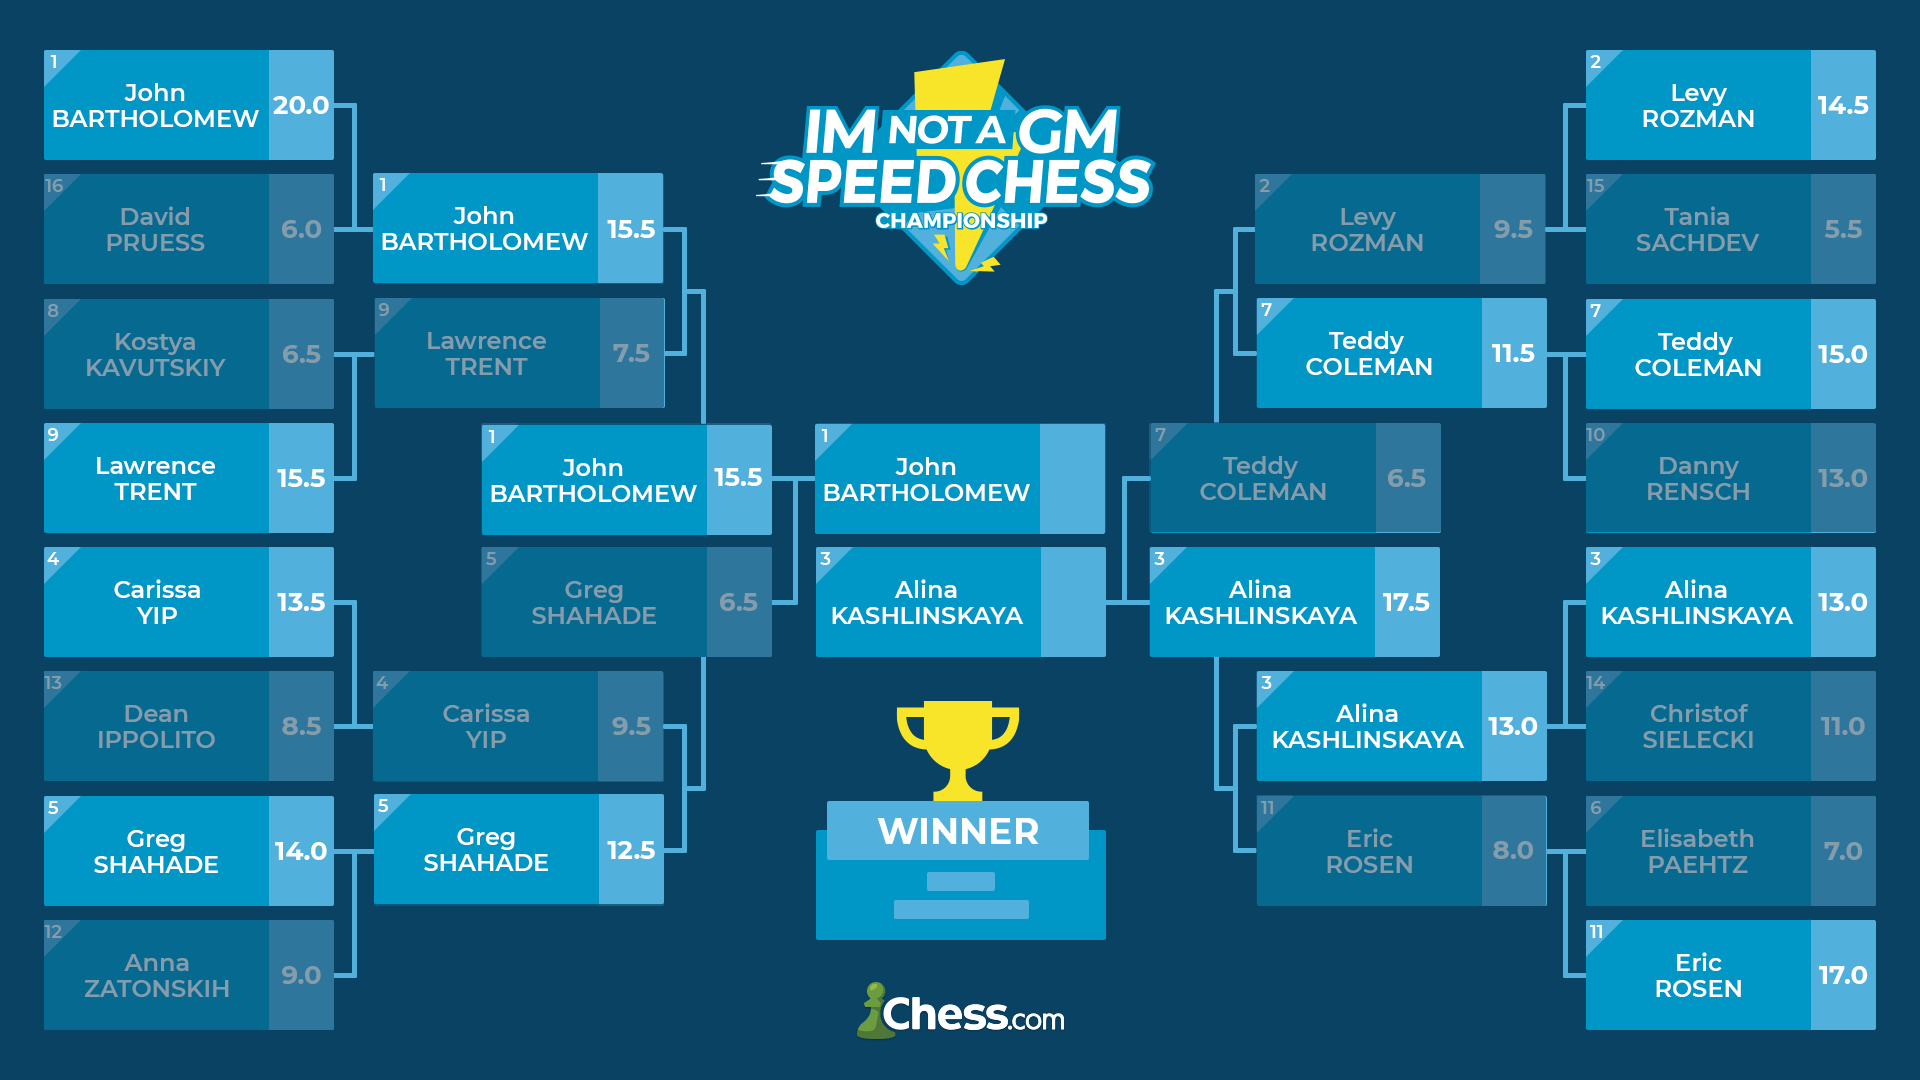 IM Not a GM Speed Chess Championship bracket